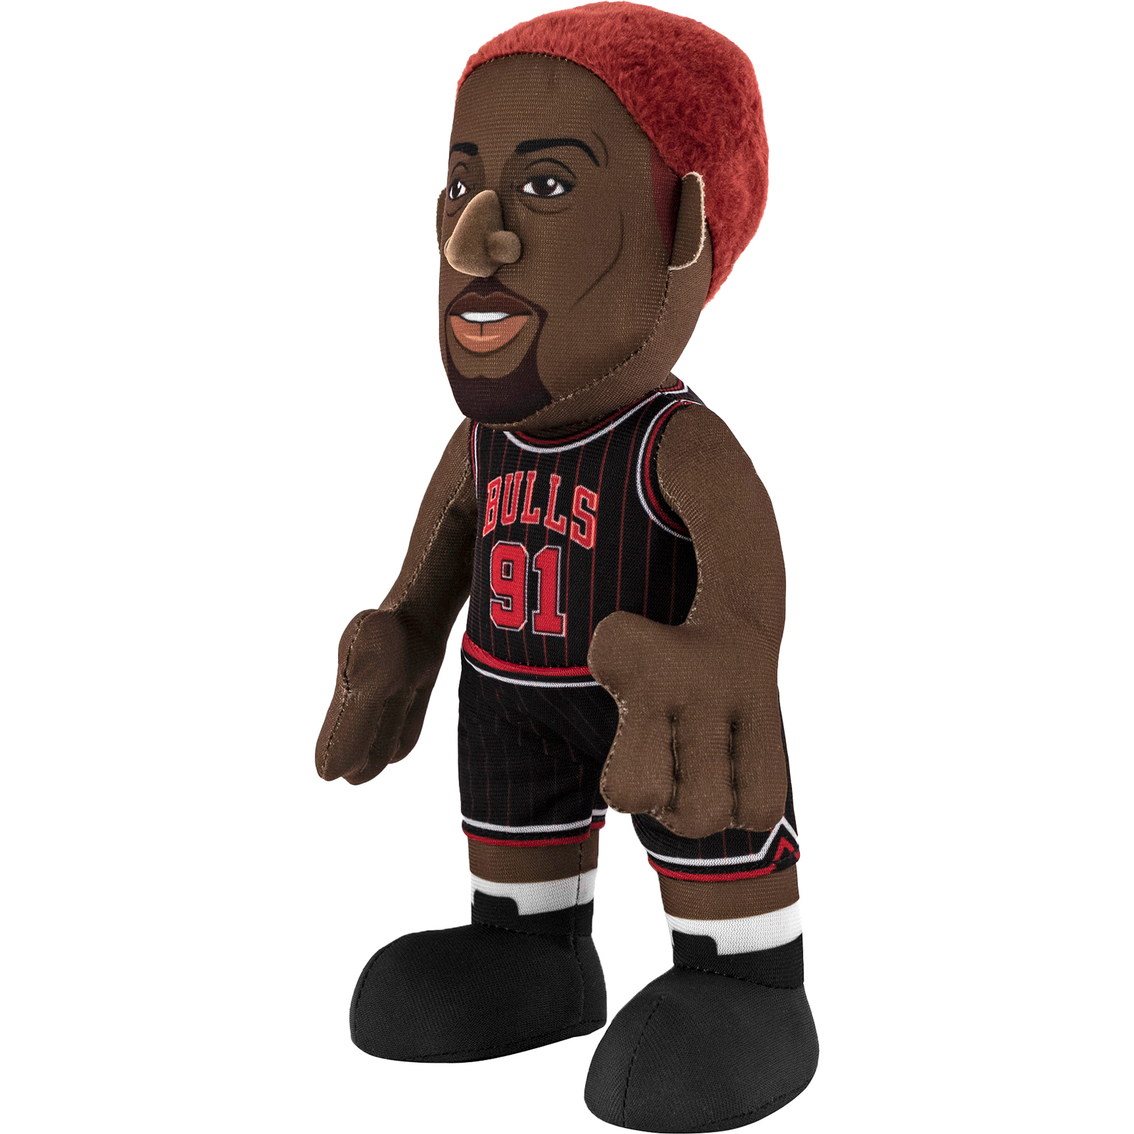 NBA Chicago Bulls Dennis Rodman 10 in. Plush Figure - Image 3 of 3